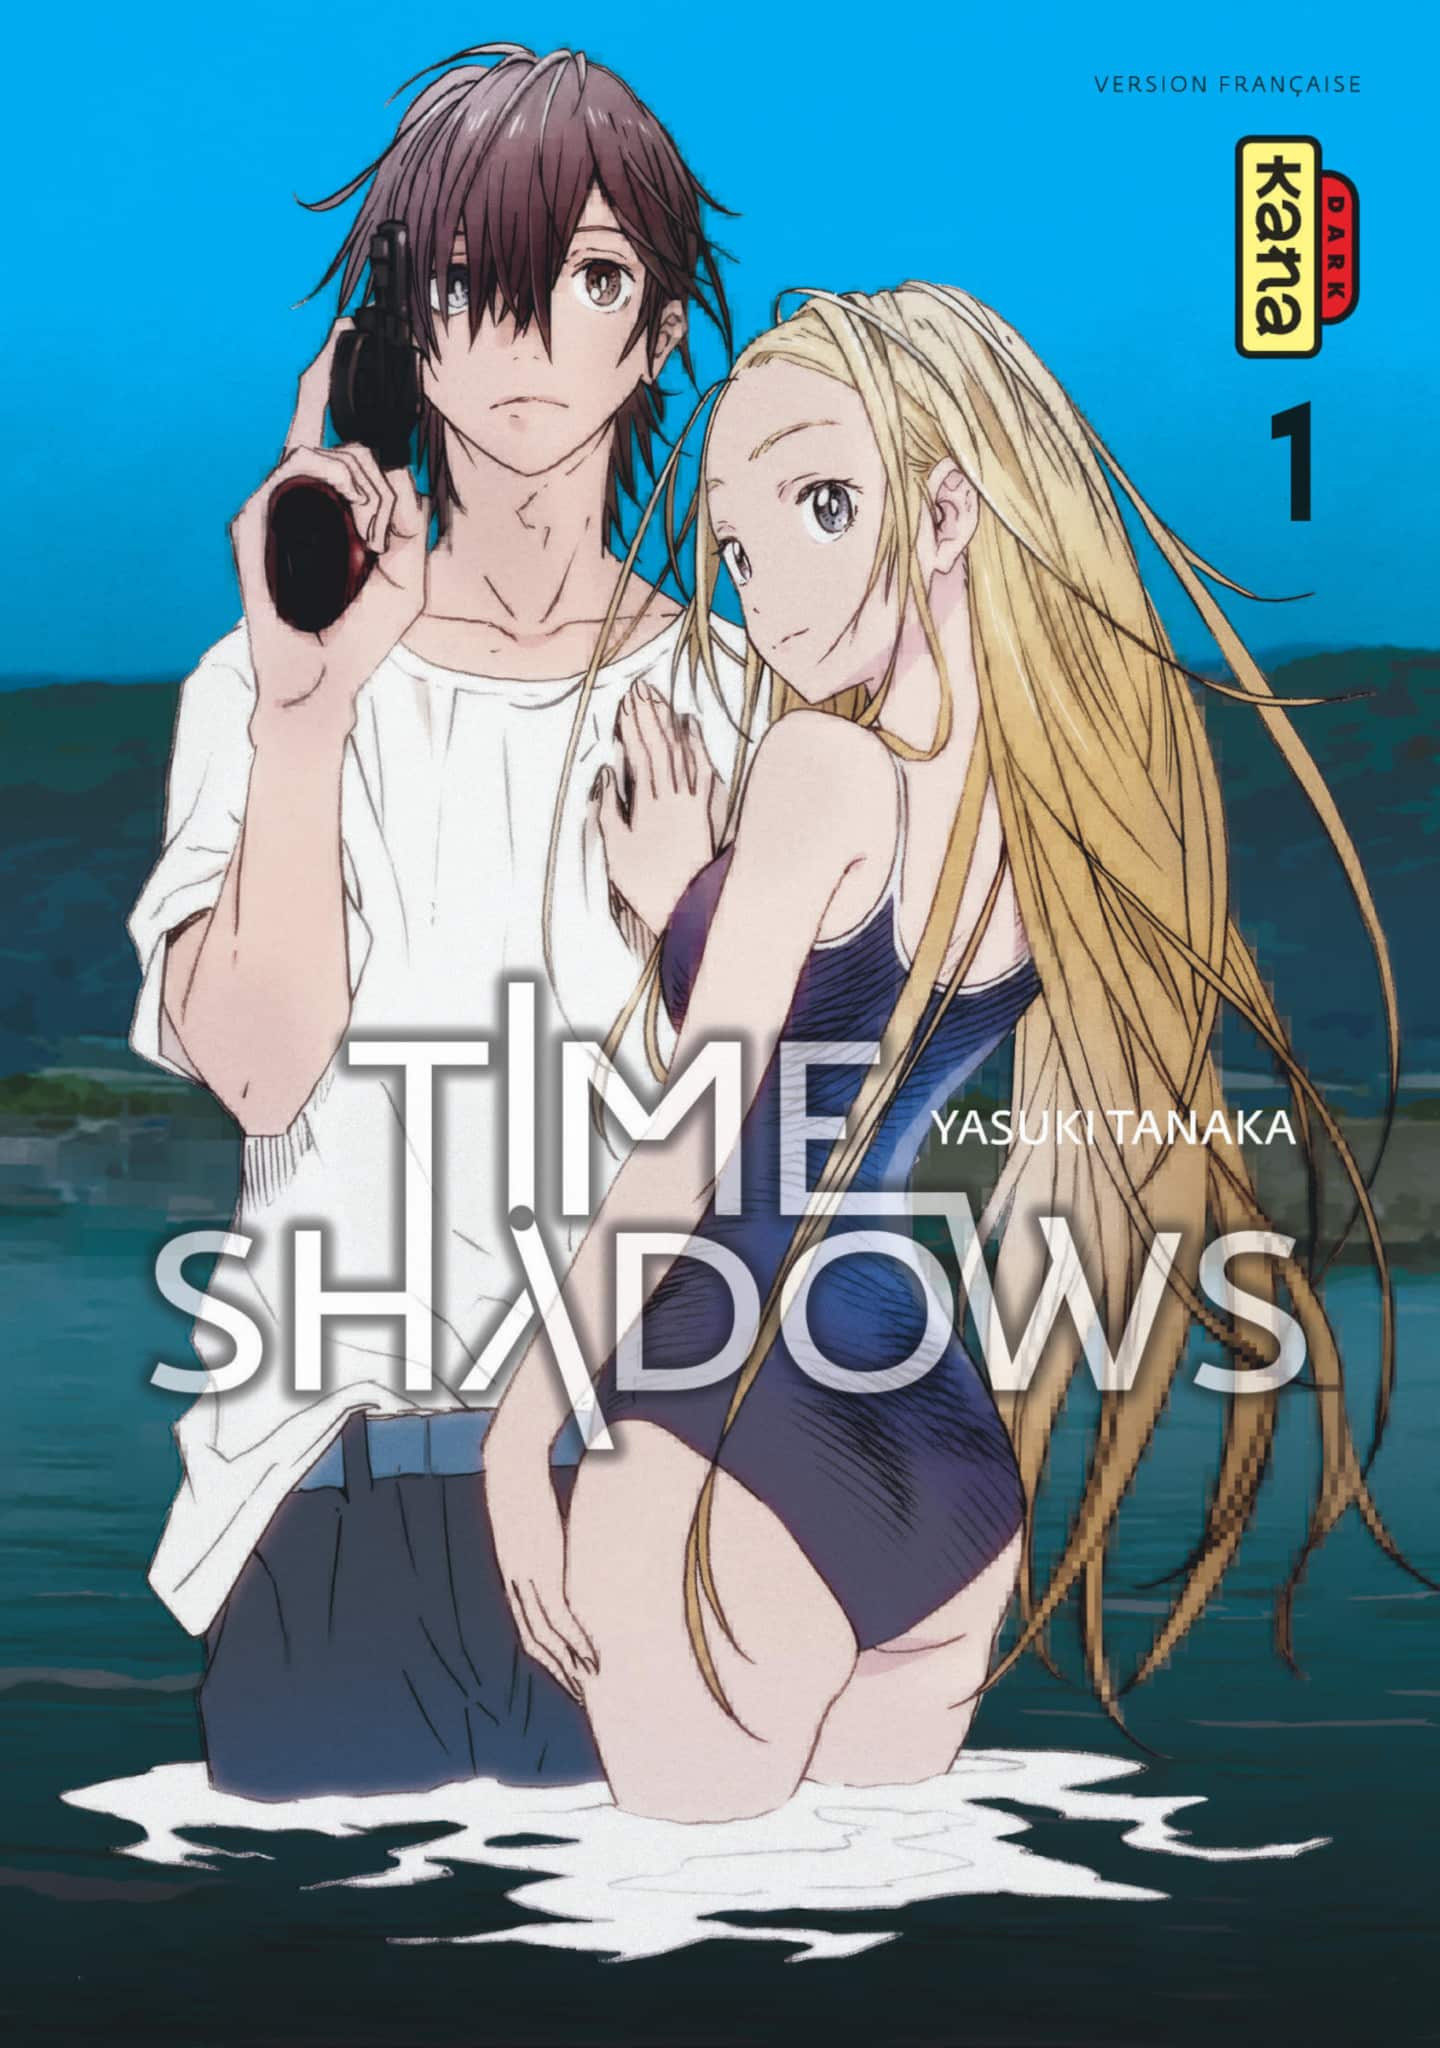 Annonce de anime Time Shadows